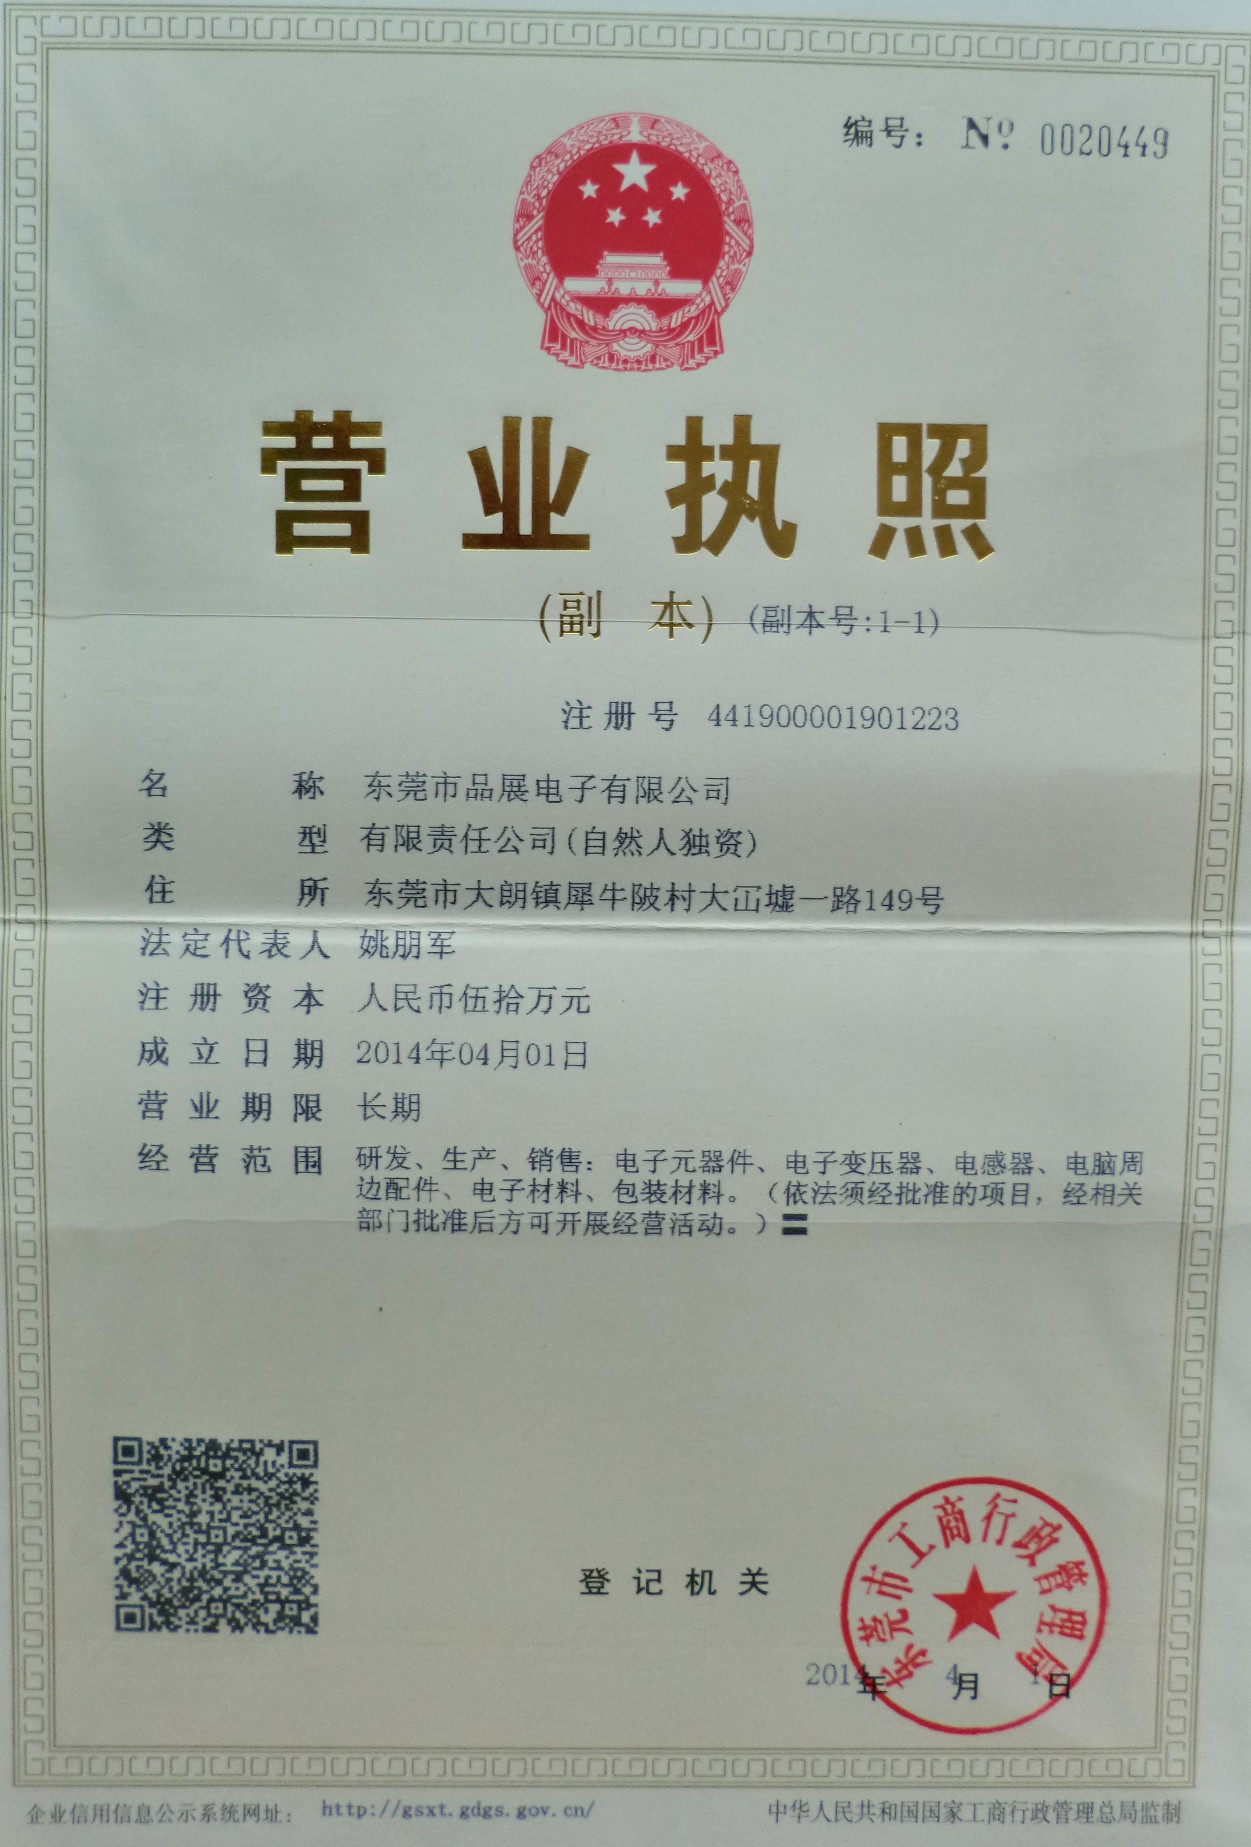 P&Z Electronic Co., Ltd Certifications